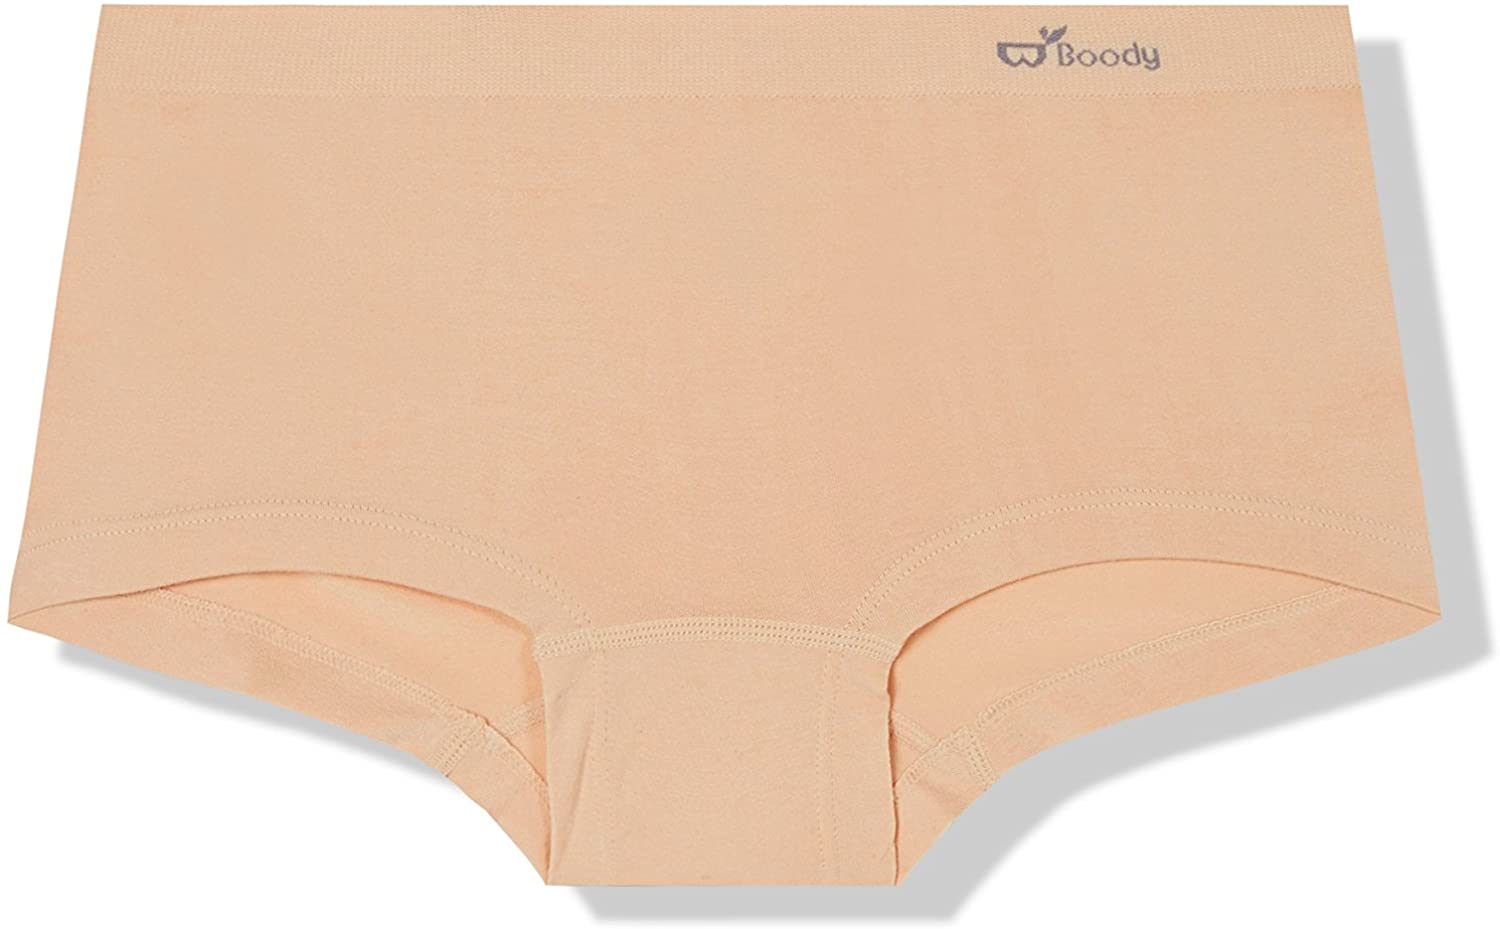 Boody Body Ecowear Women's Boyleg Briefs - Nude - X-large 